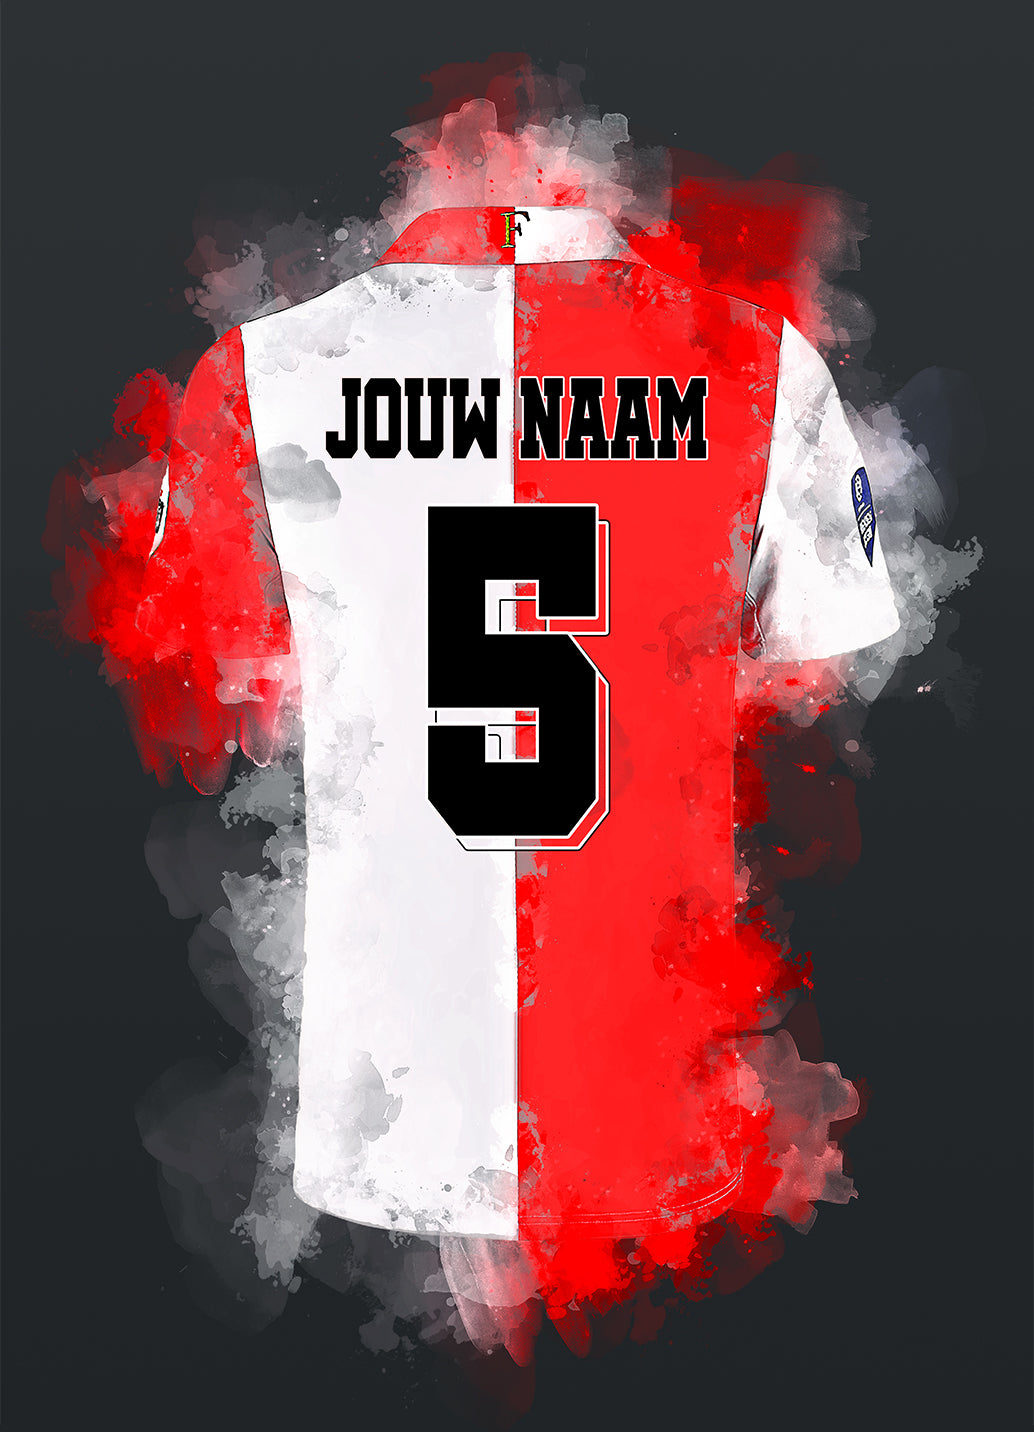 Feyenoord voetbalposter met eigen naam en rugnummer